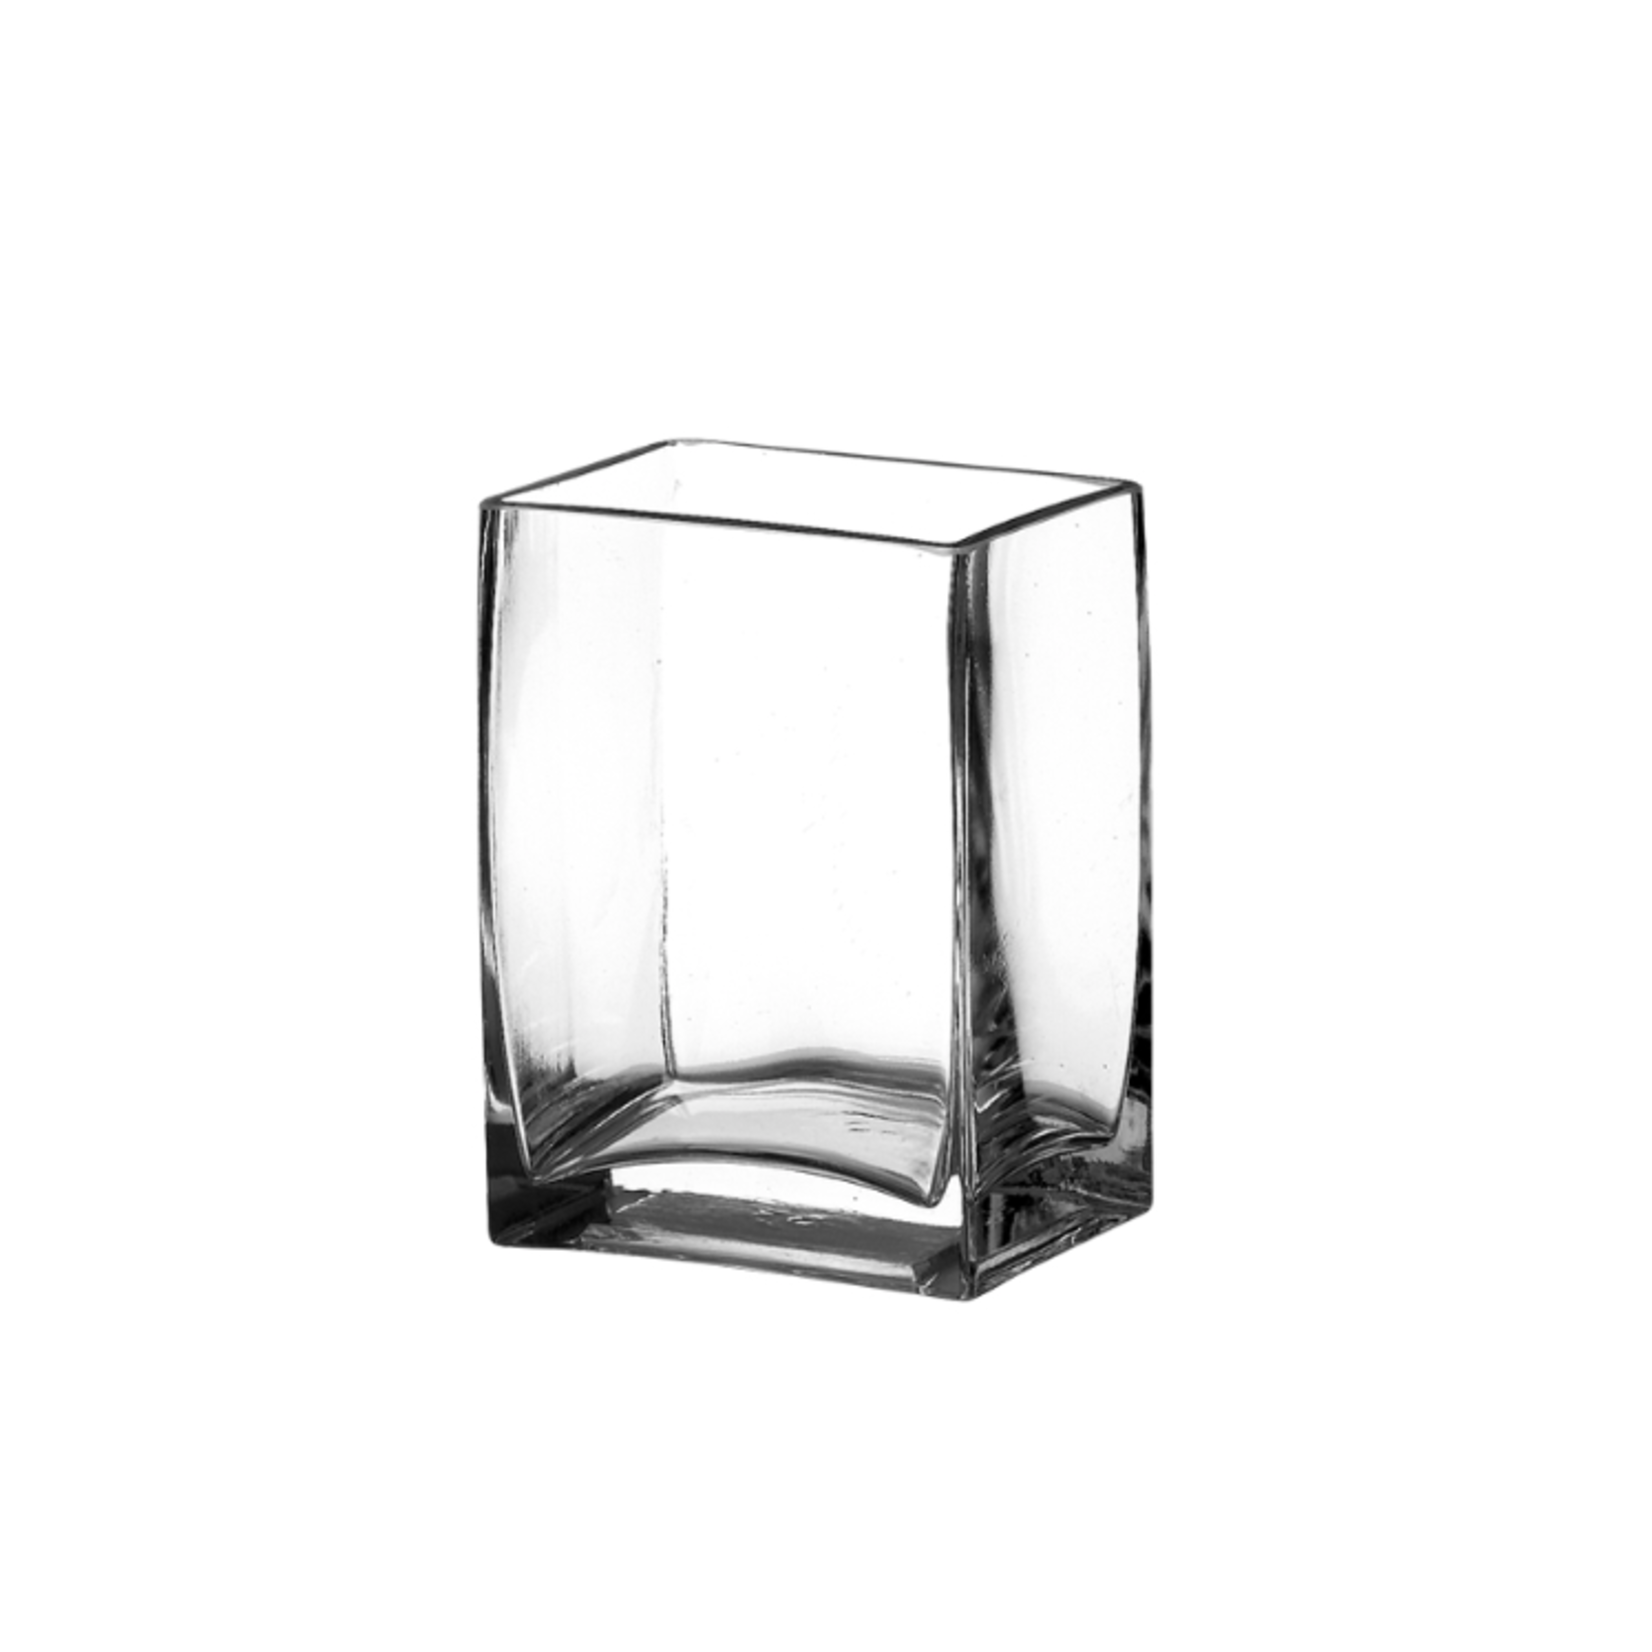 5"H X 3" X 4" GLASS RECTANGLE VASE